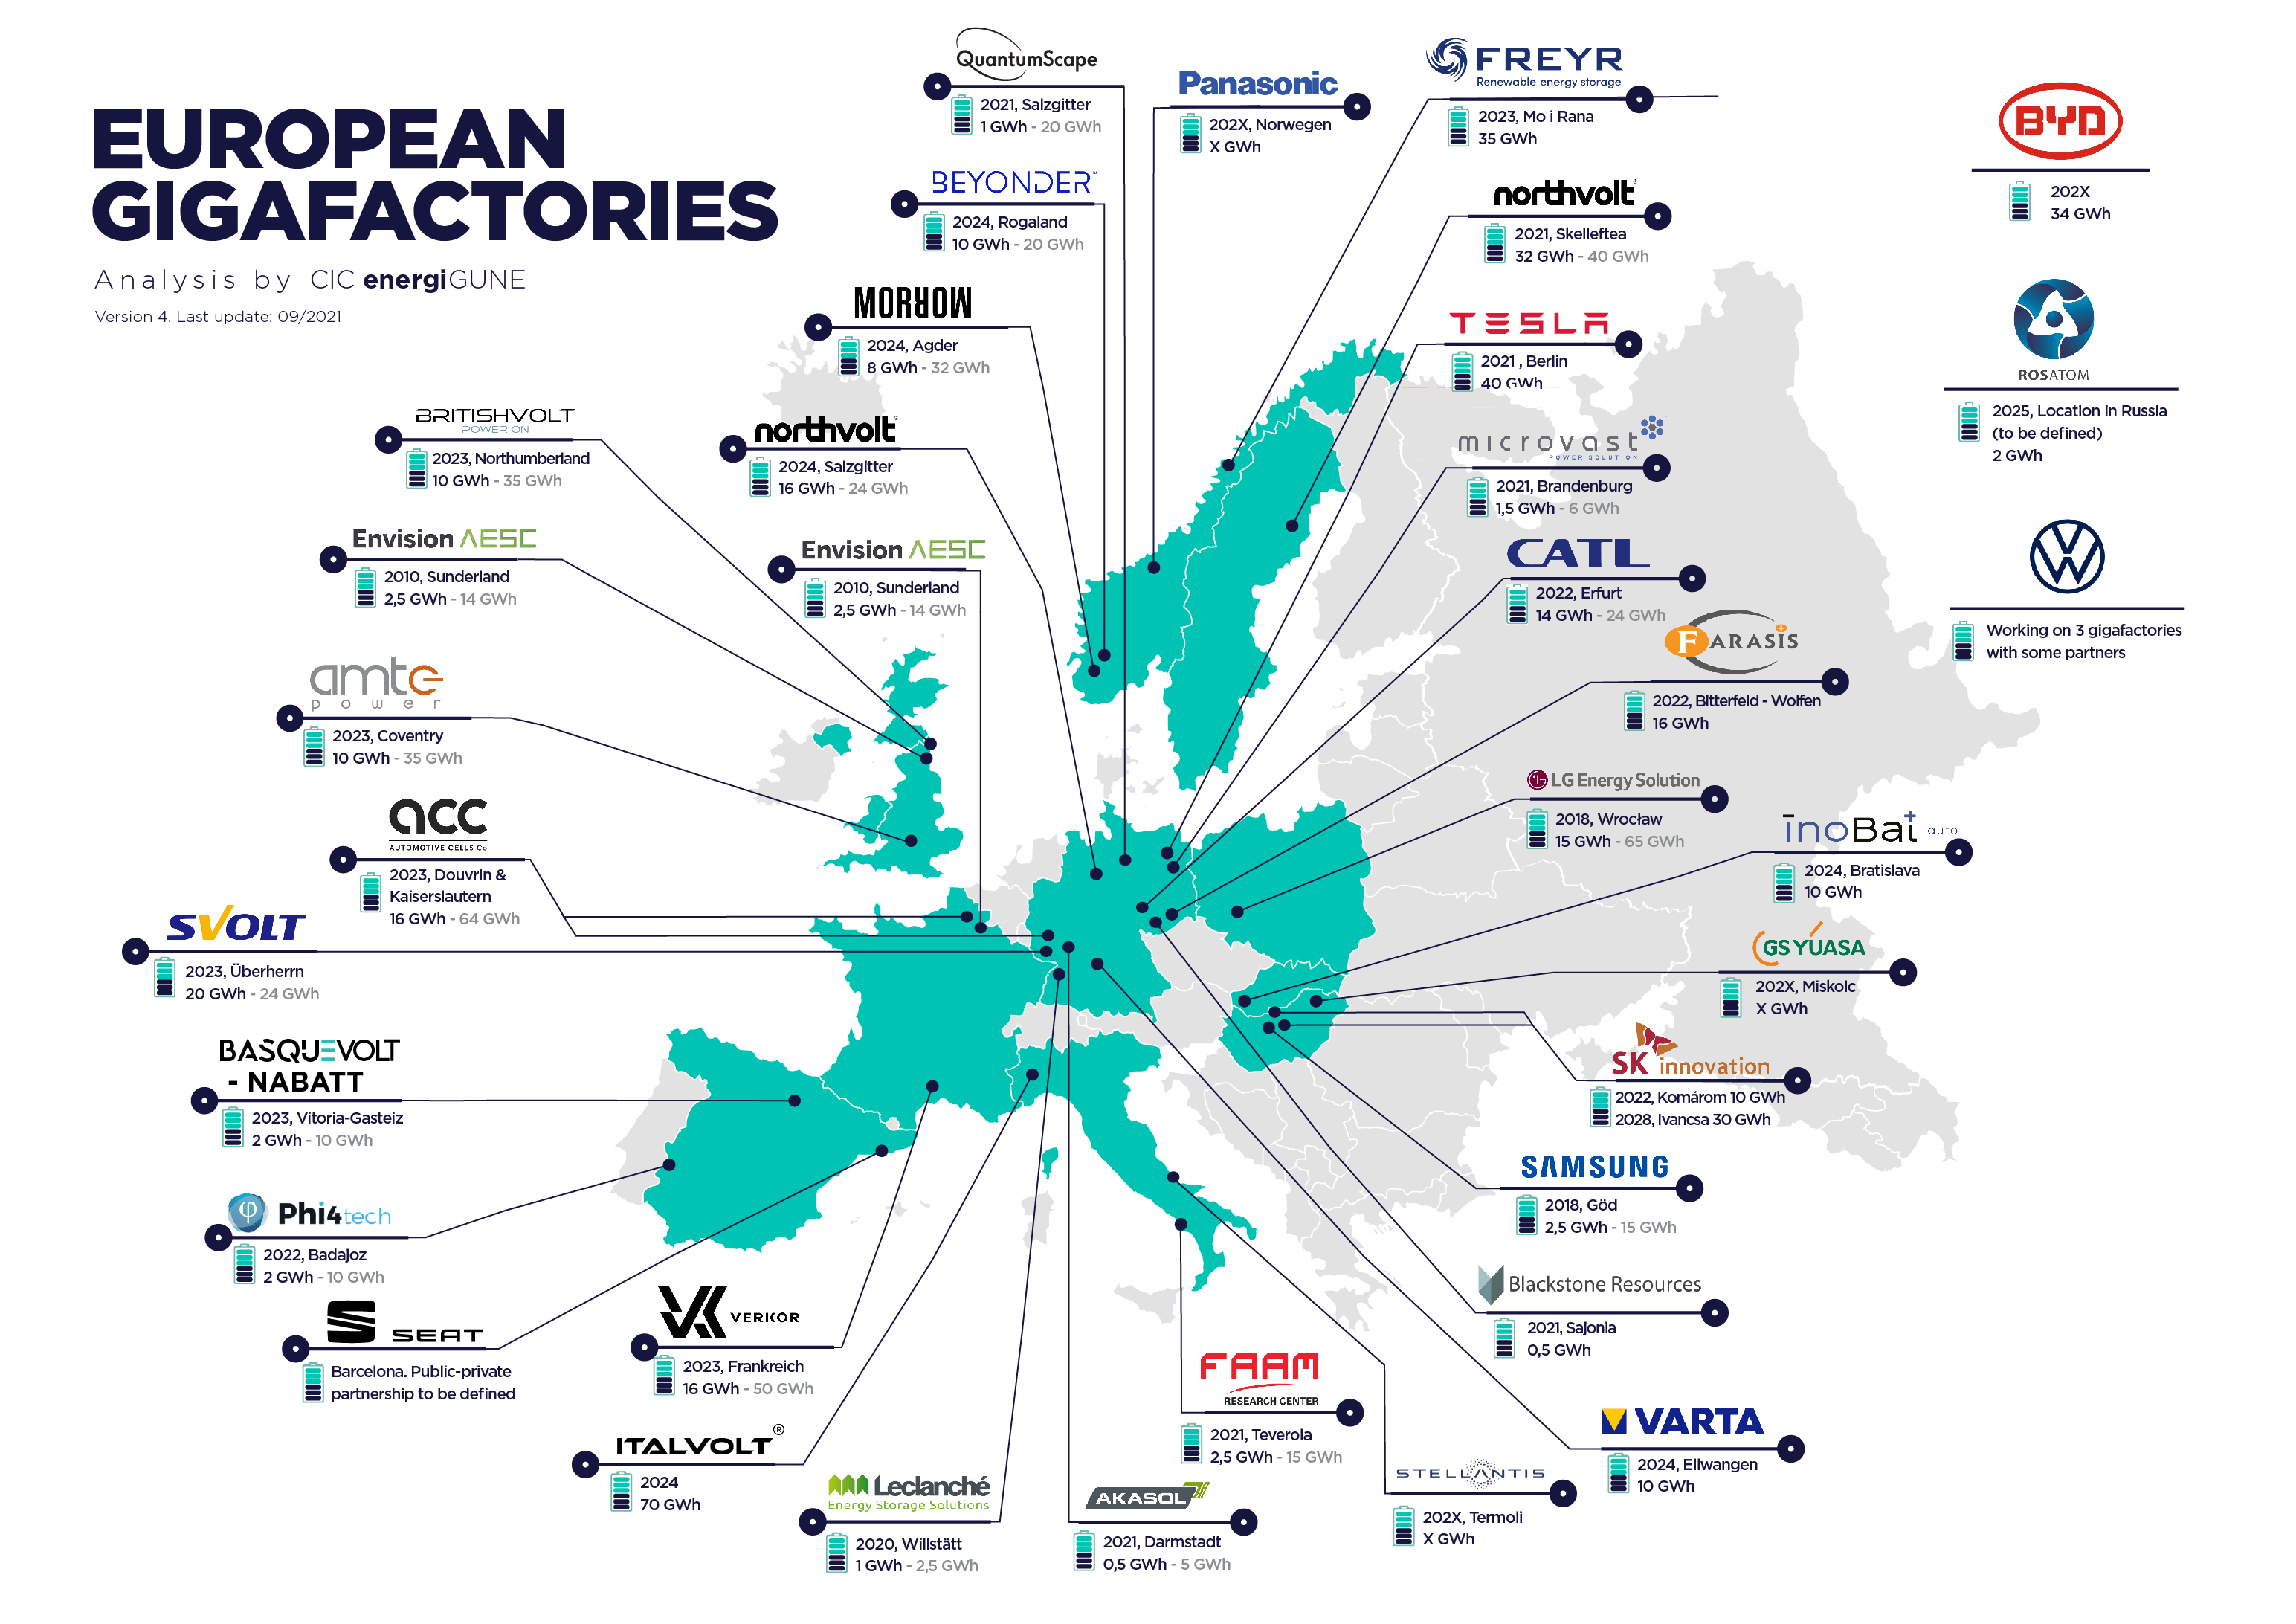 Gigafactories Map Europe Cicenergigune 